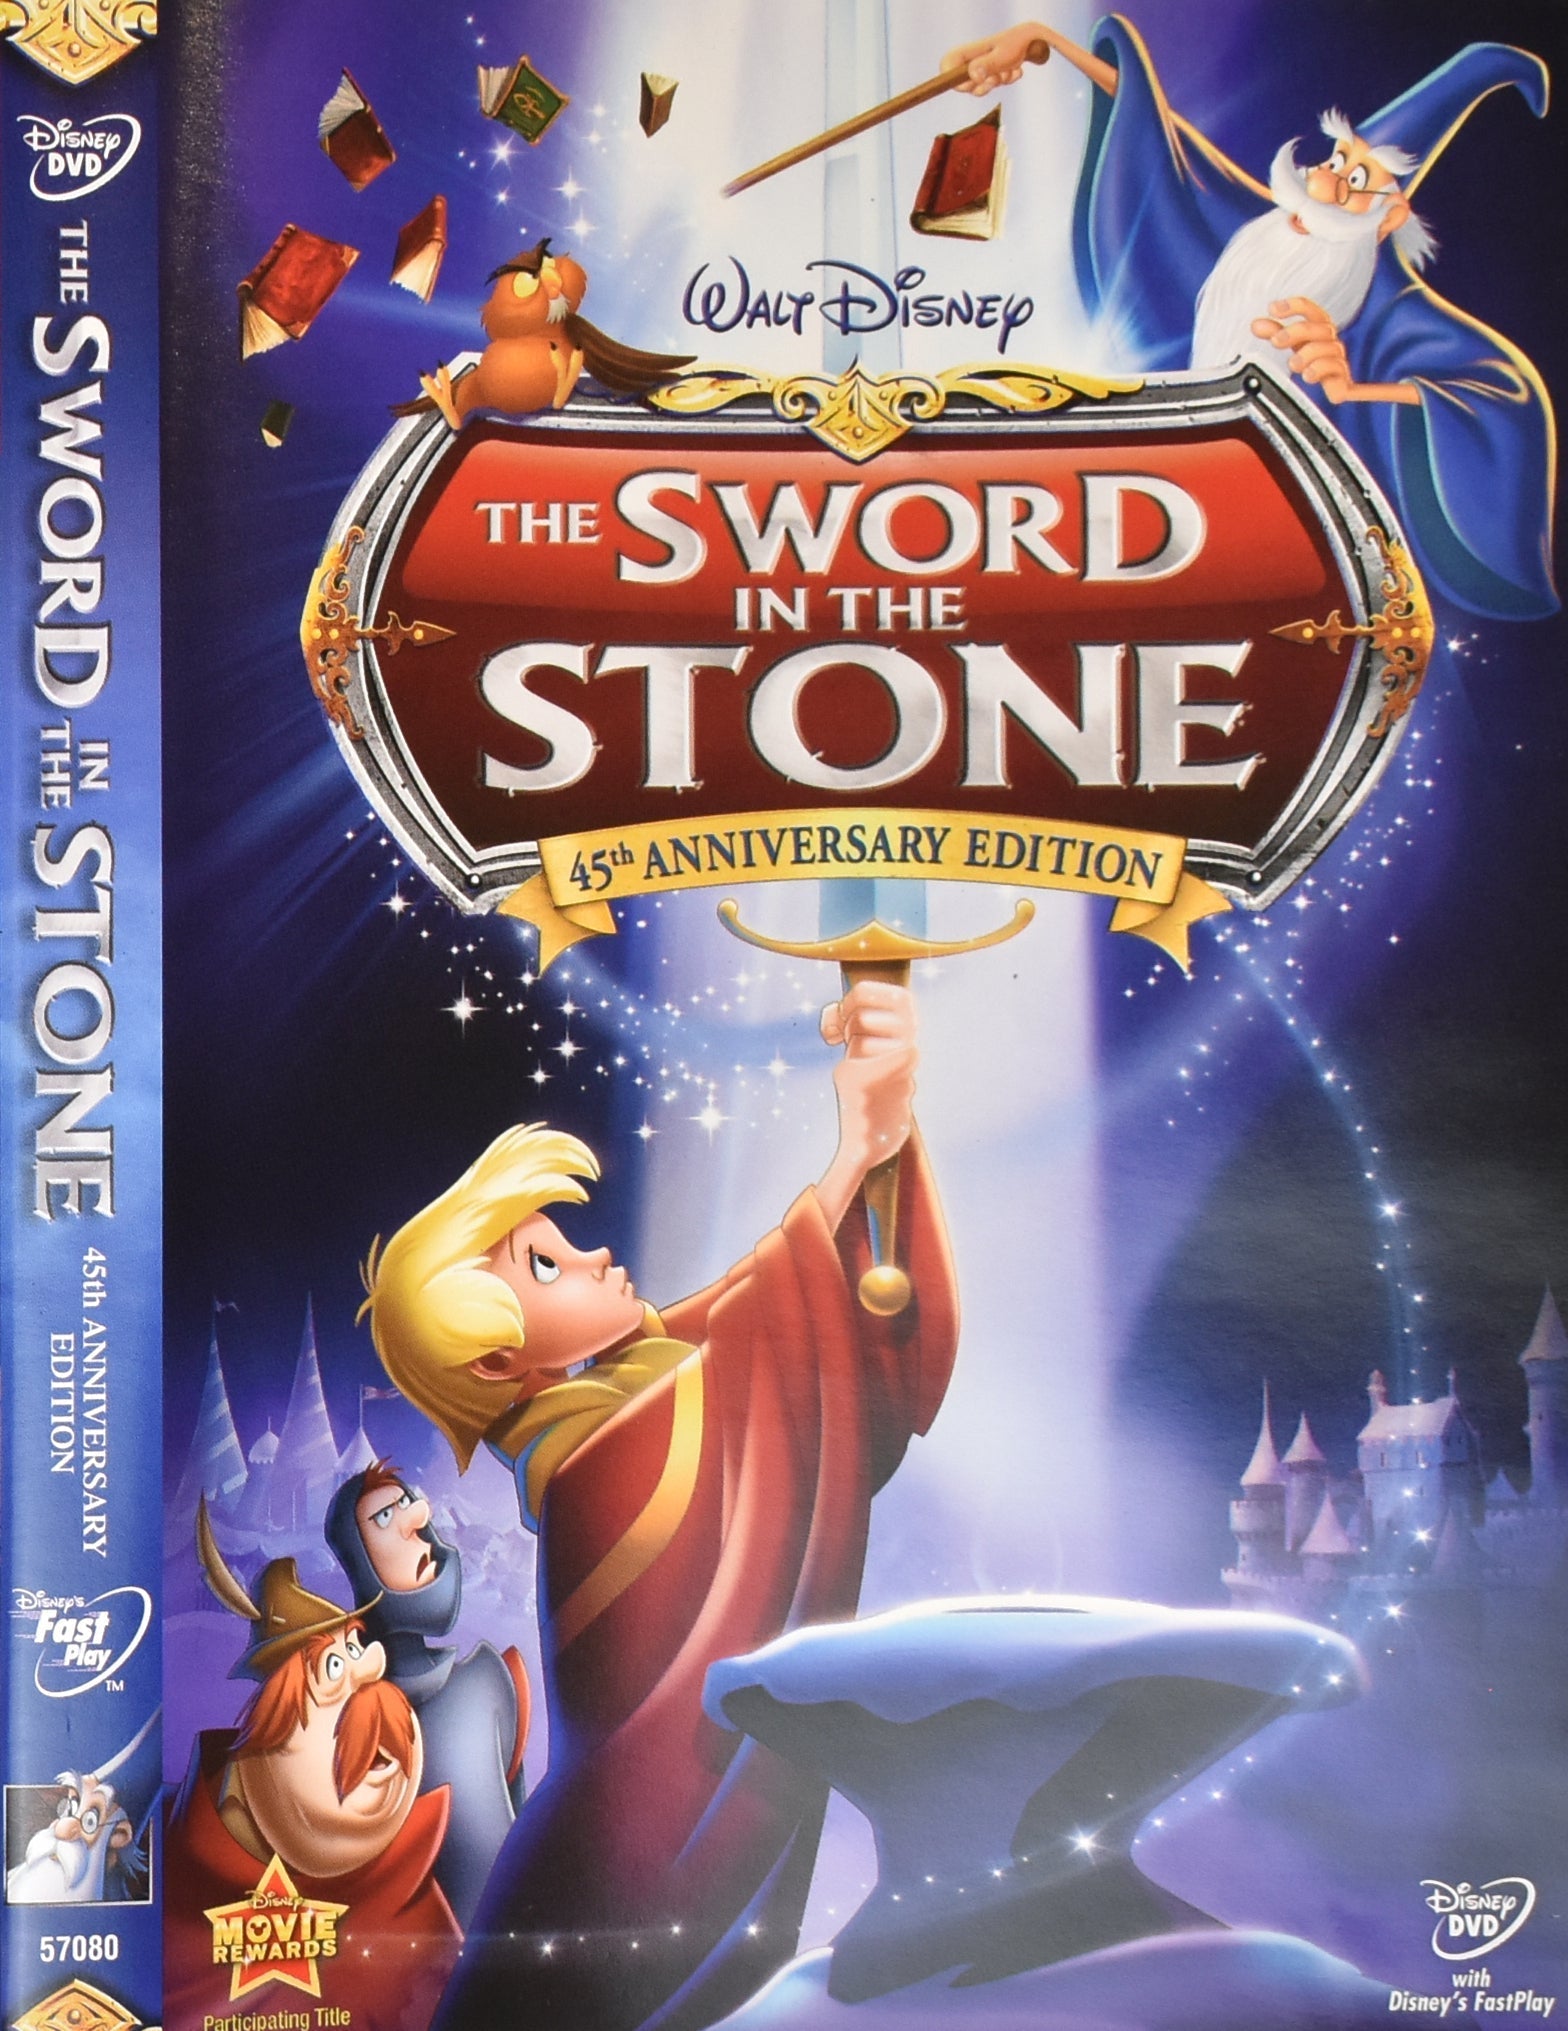 The Sword of the stone Dvd Movie Used Disney